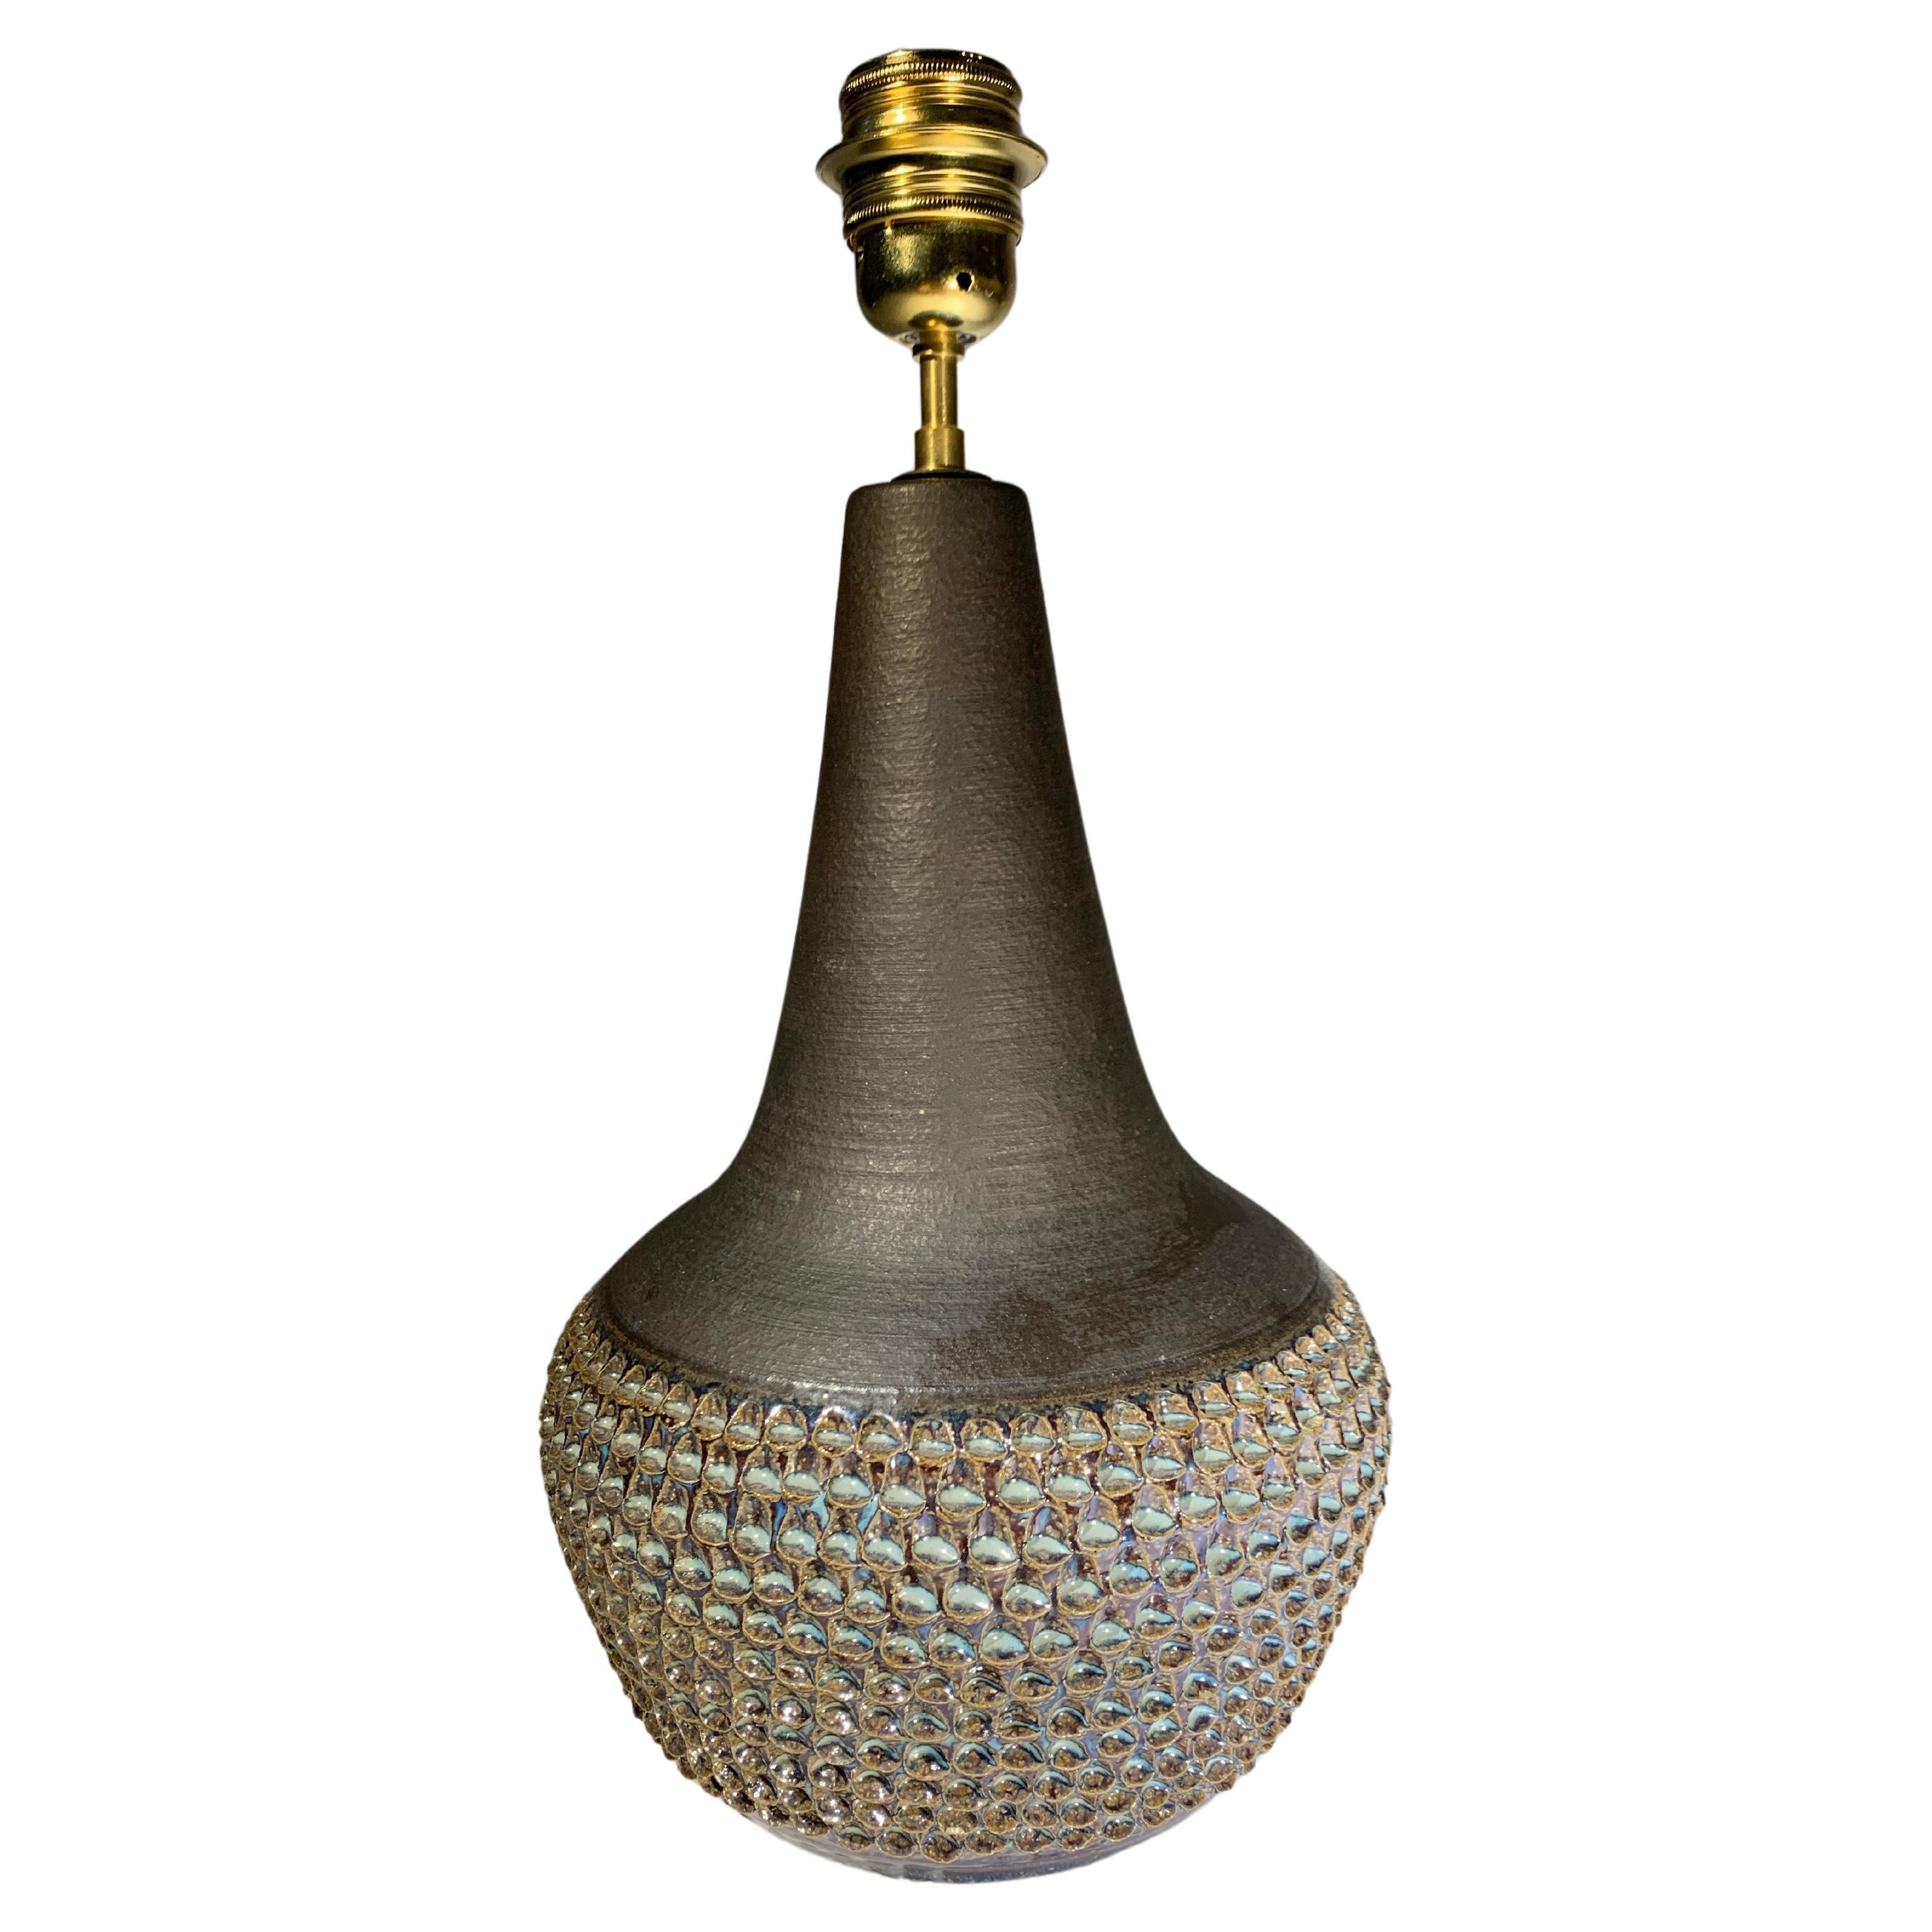 Einar Johansen ceramic Table lamp